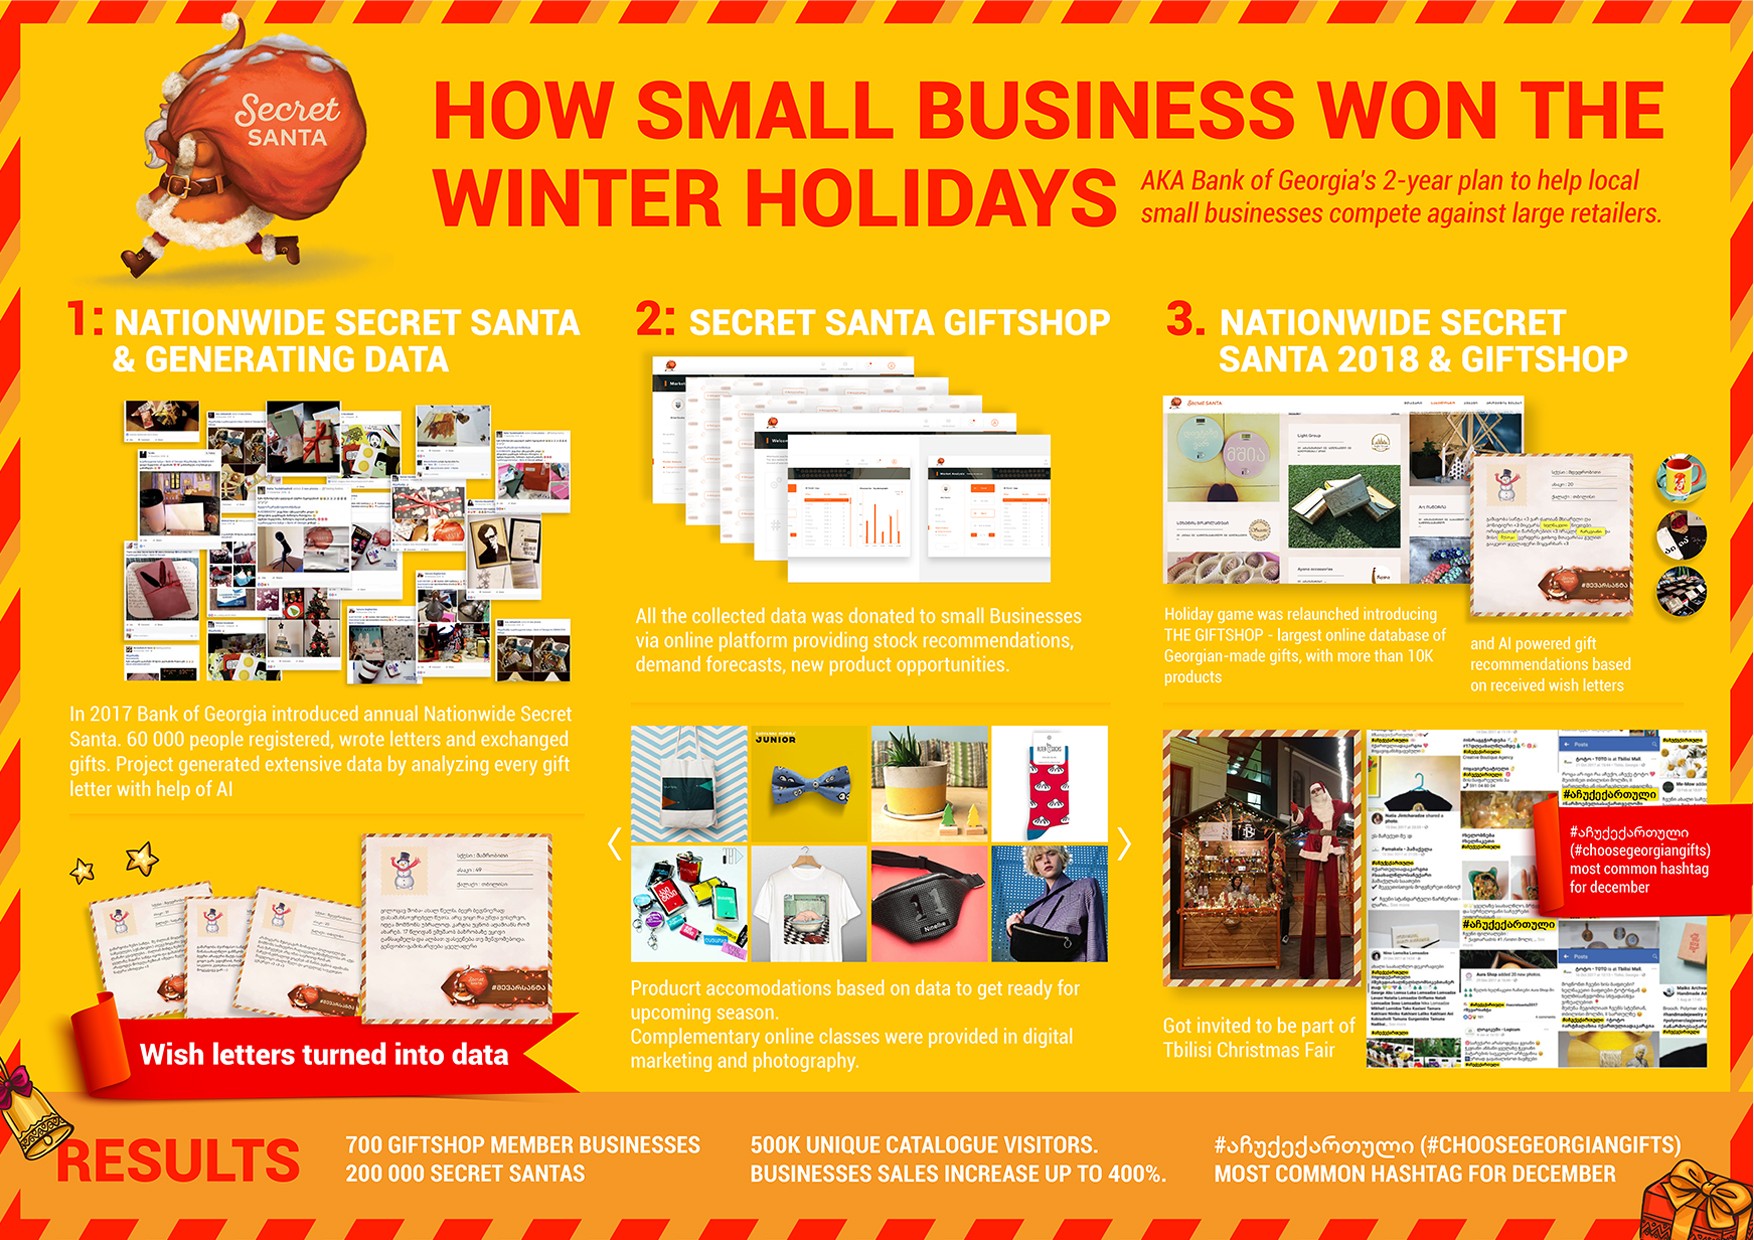 SECRET SANTA: How small business won winter holidays